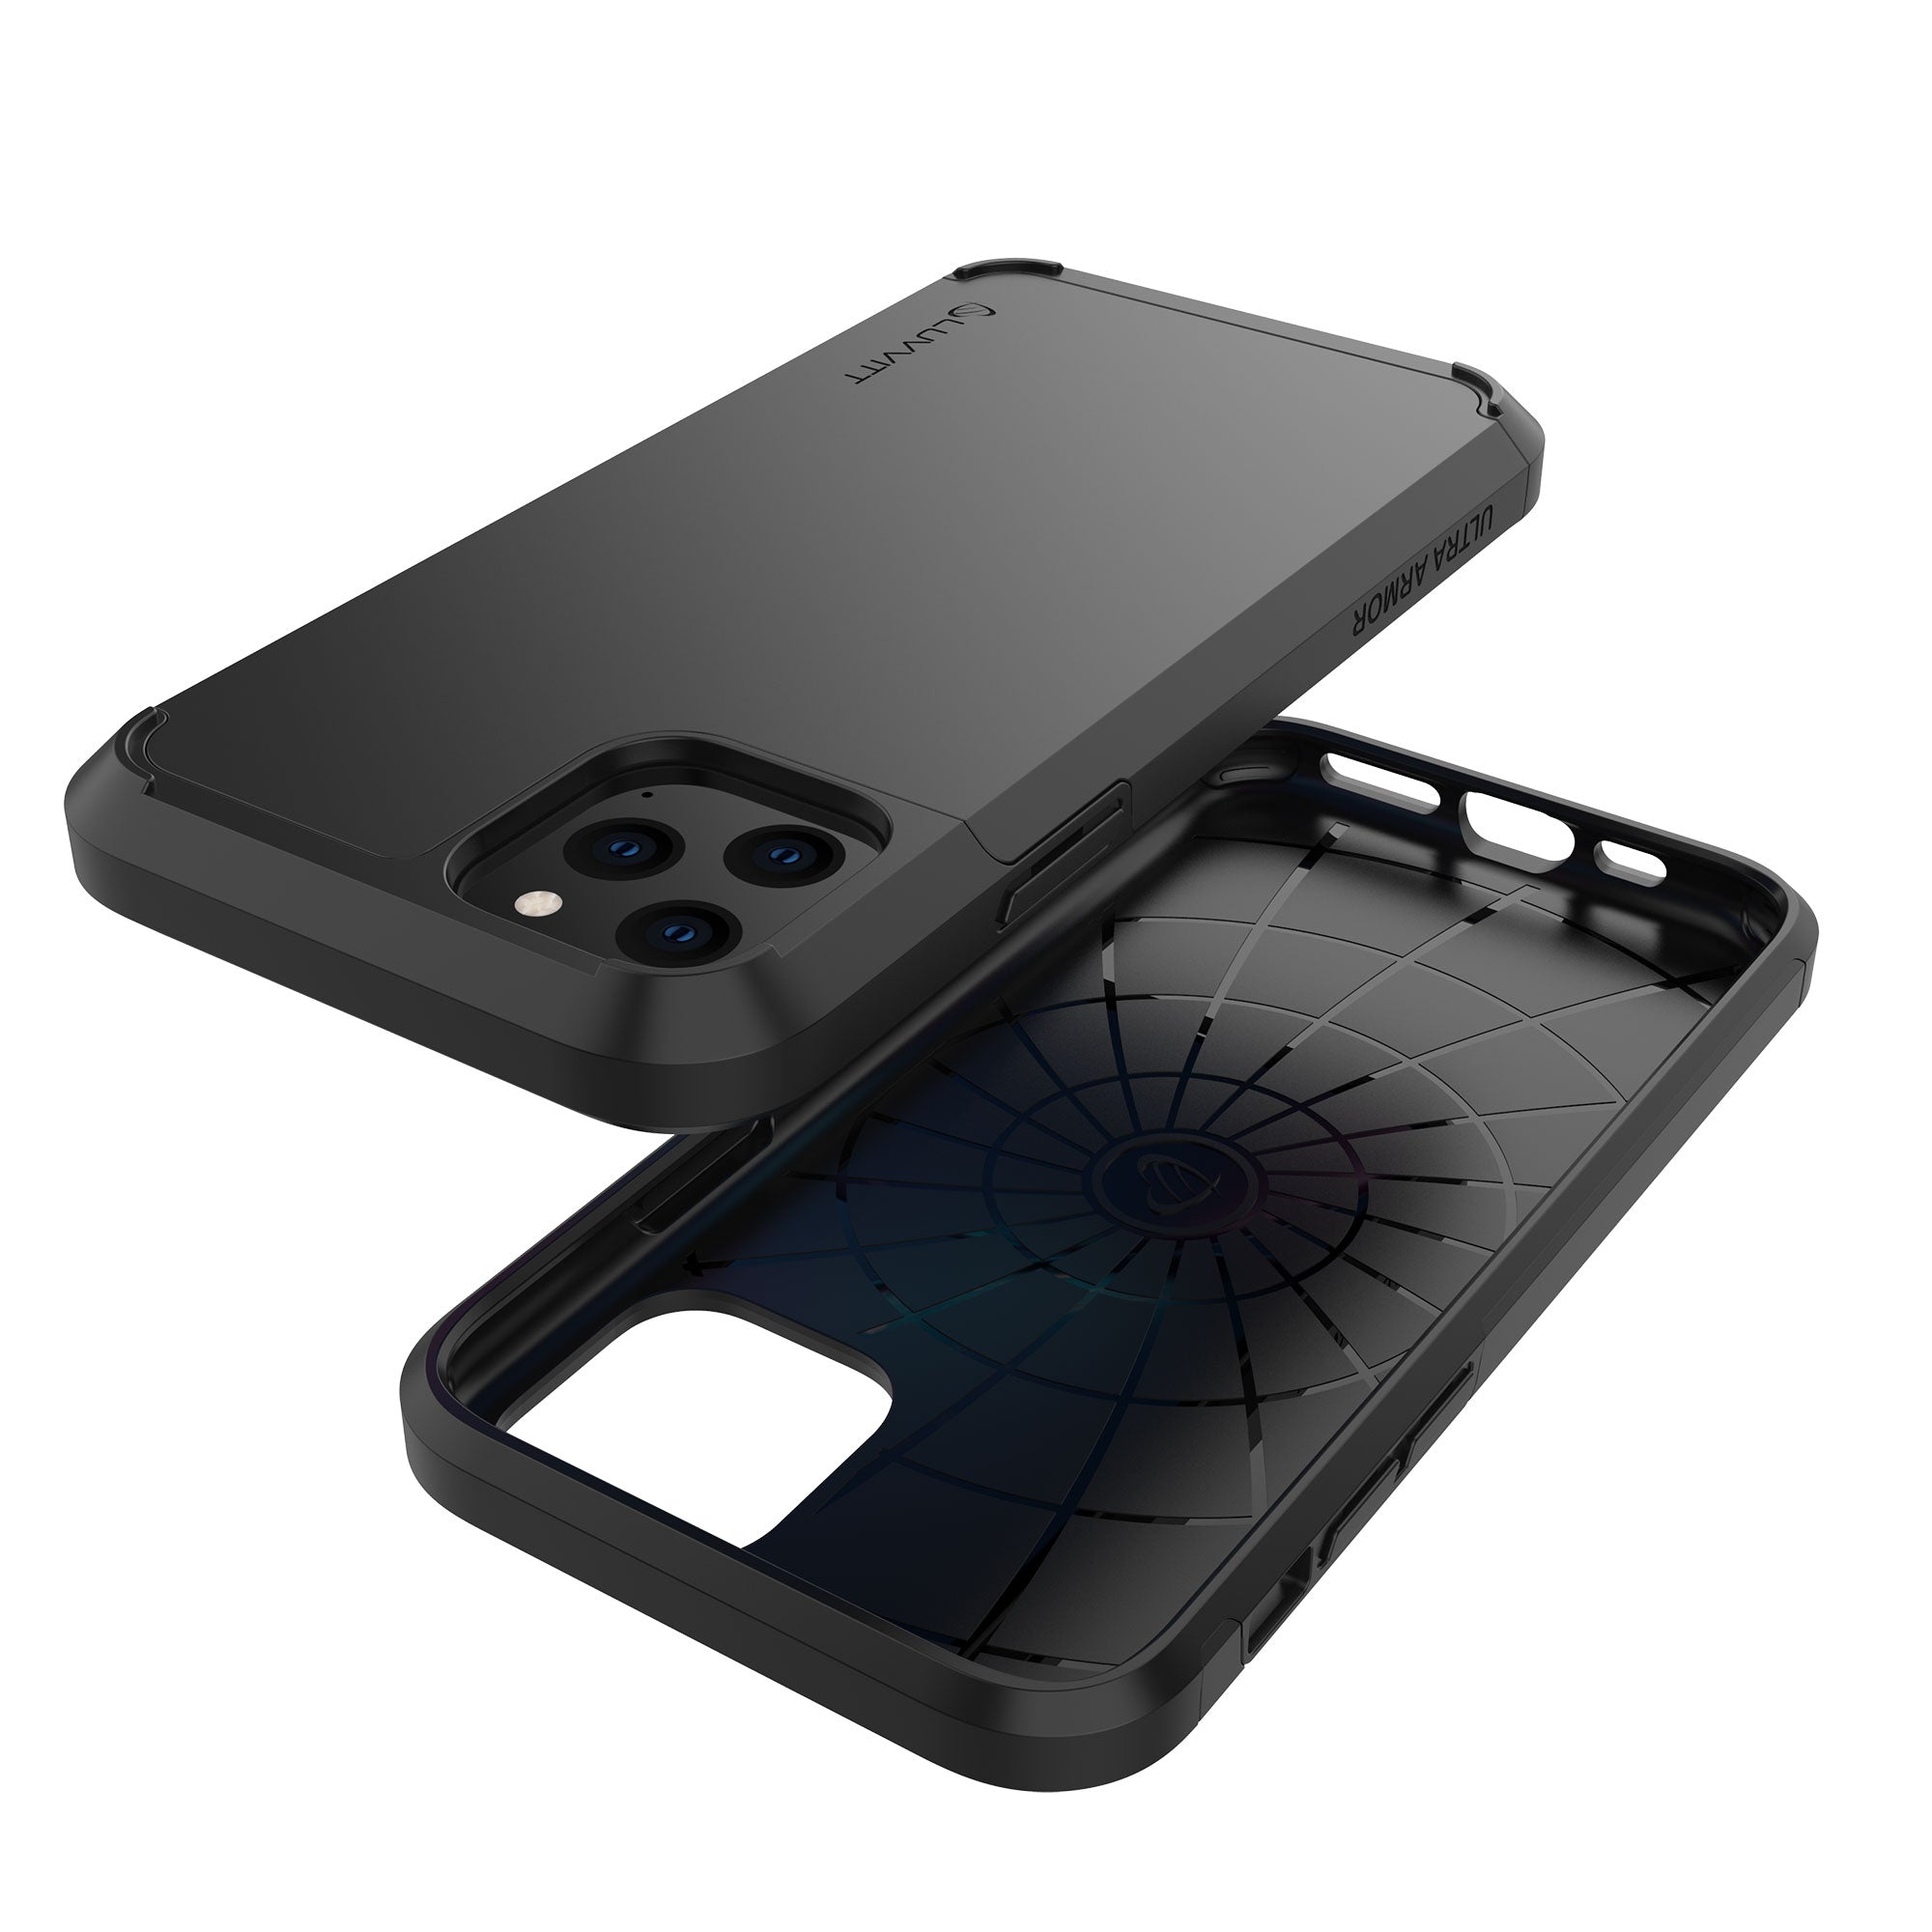 Luvvitt $250 Warranty ULTRA ARMOR Case + Liquid Glass Screen Protector Bundle for iPhone 11 Pro 2019 - Black